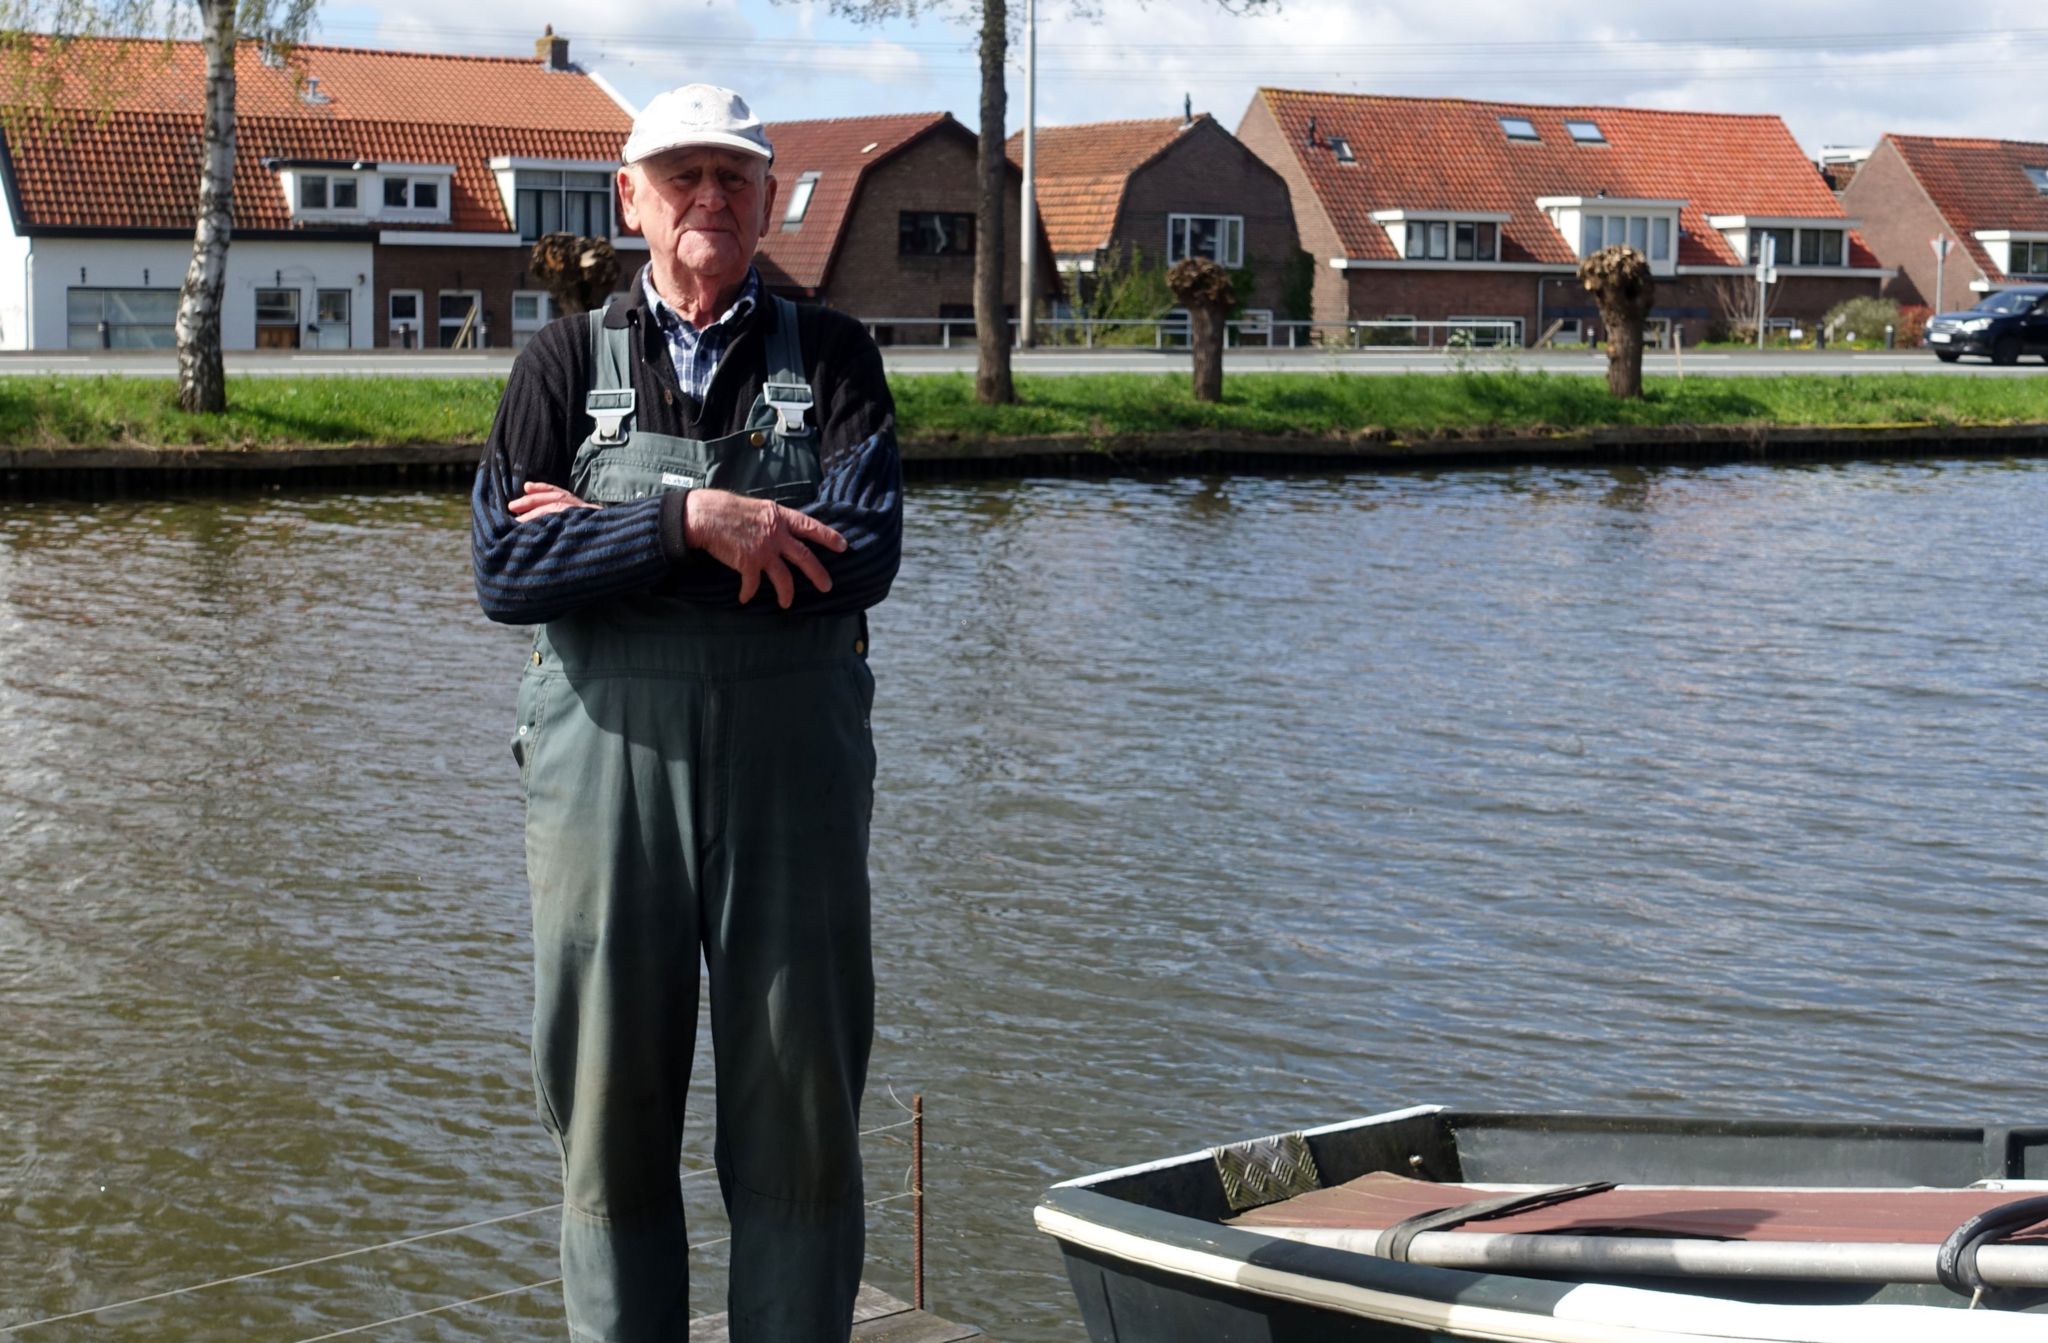 Jan Meijer standing by the river where he found the wheelie bin.